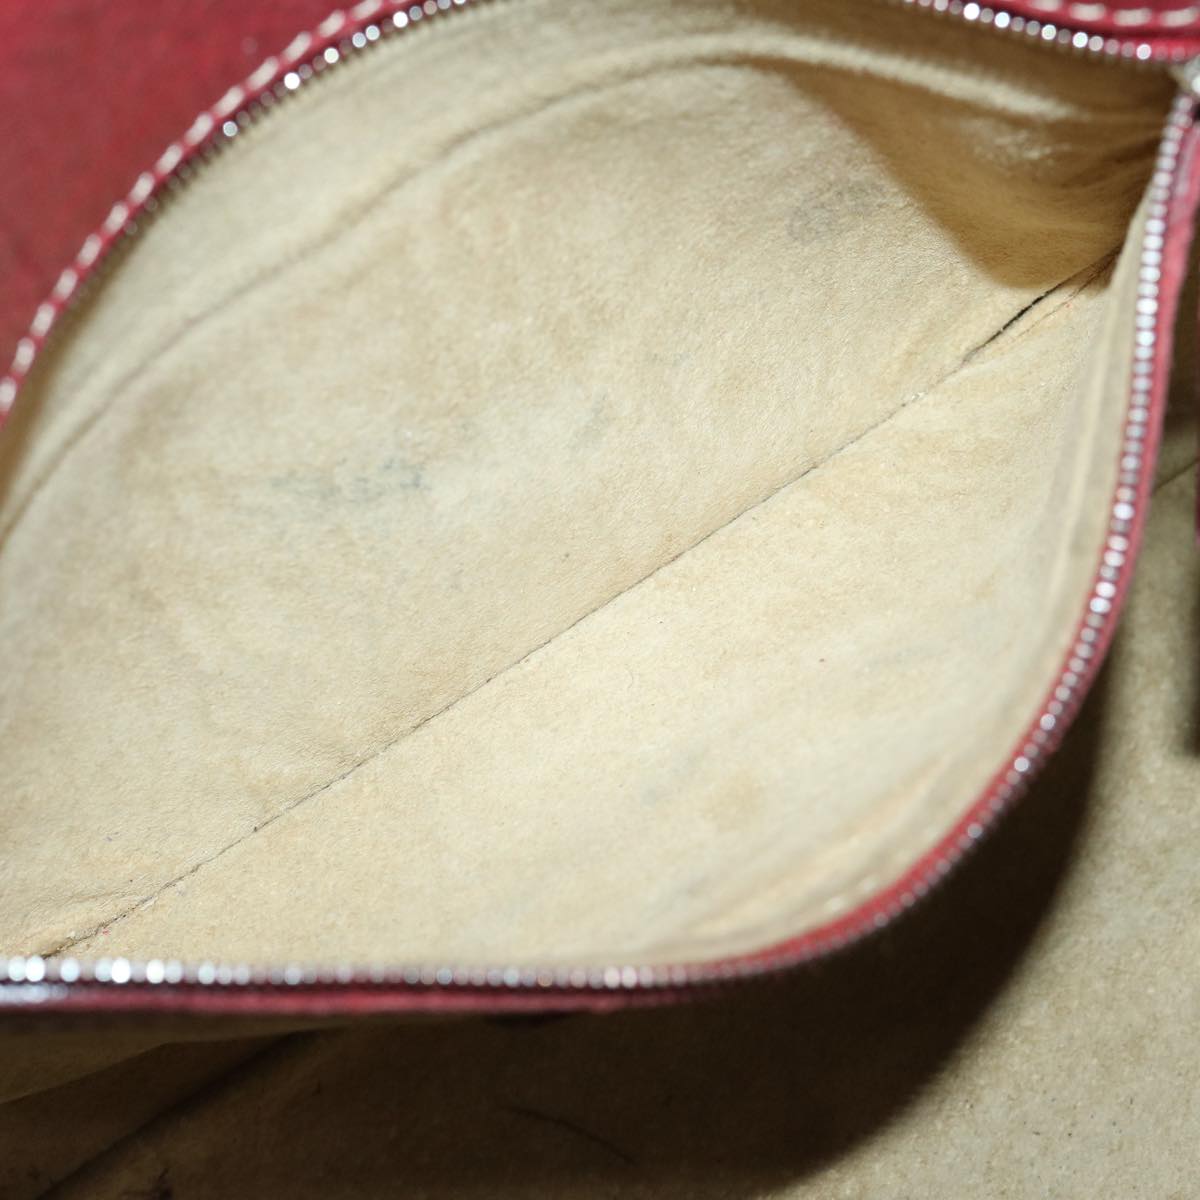 FENDI Mamma Baguette Shoulder Bag Leather Red Auth ep3505